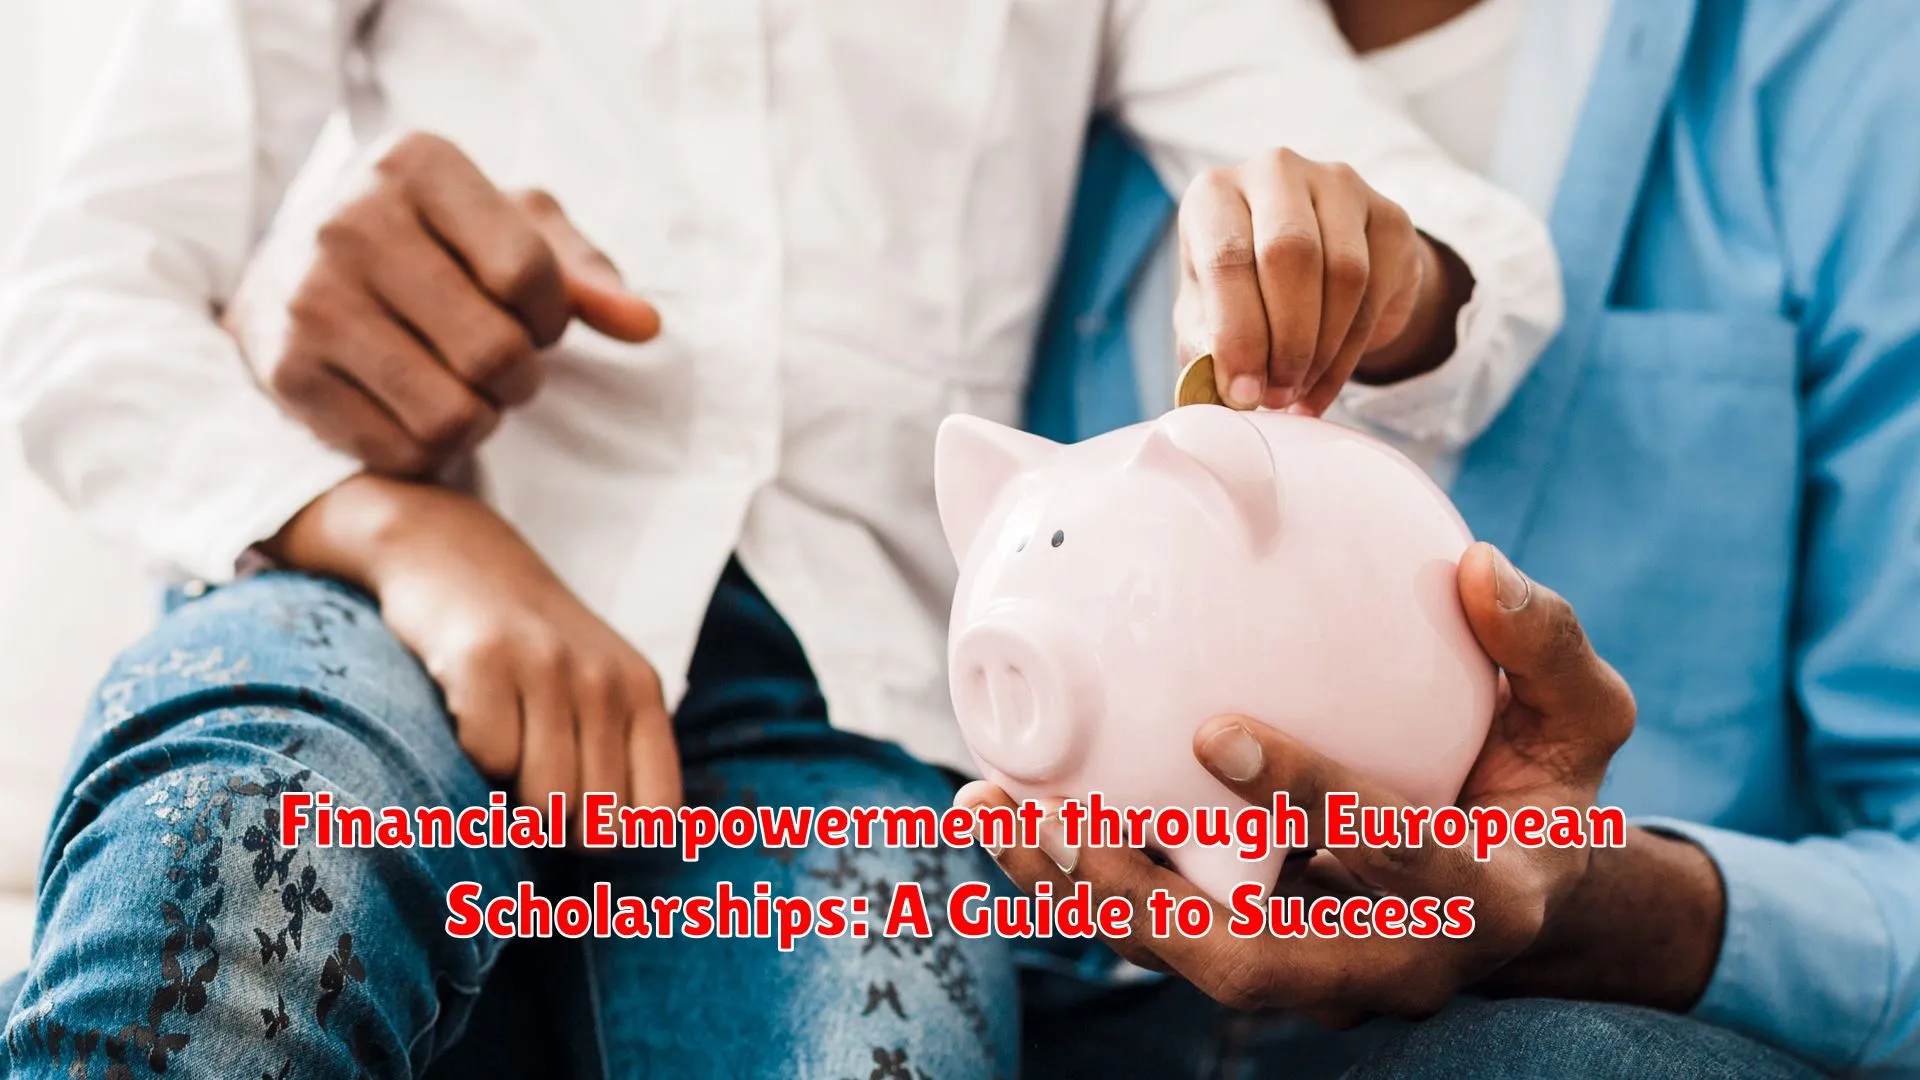 Financial Empowerment through European Scholarships: A Guide to Success